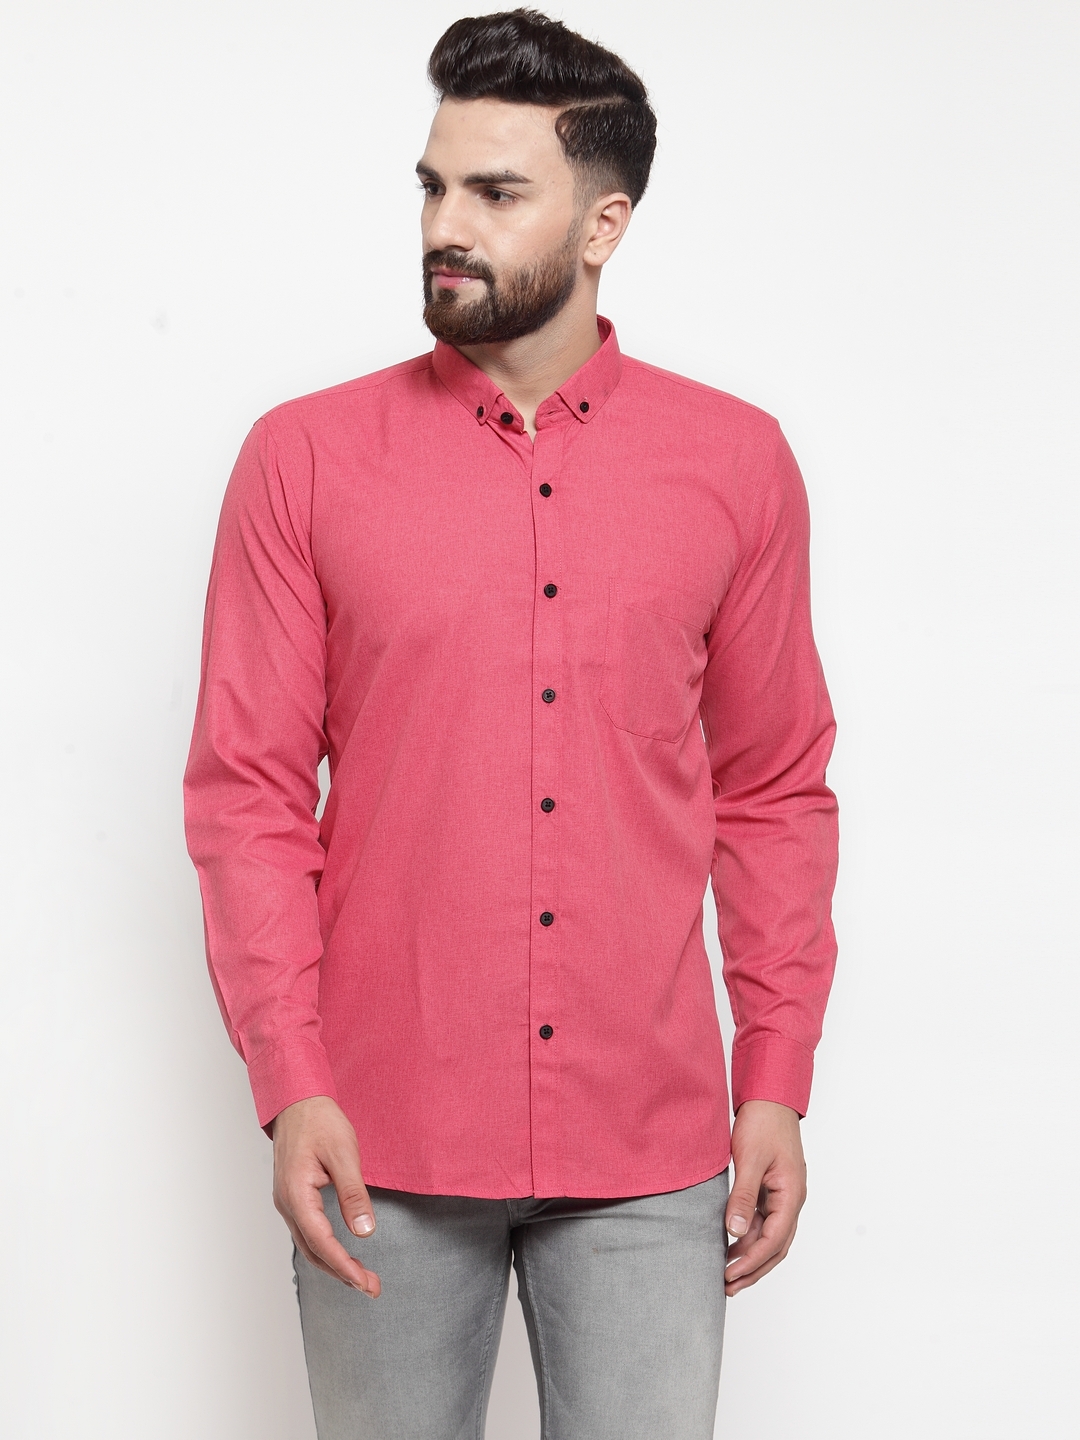 Jainish | Jainish Men's Cotton Solid Button Down Casual Shirts